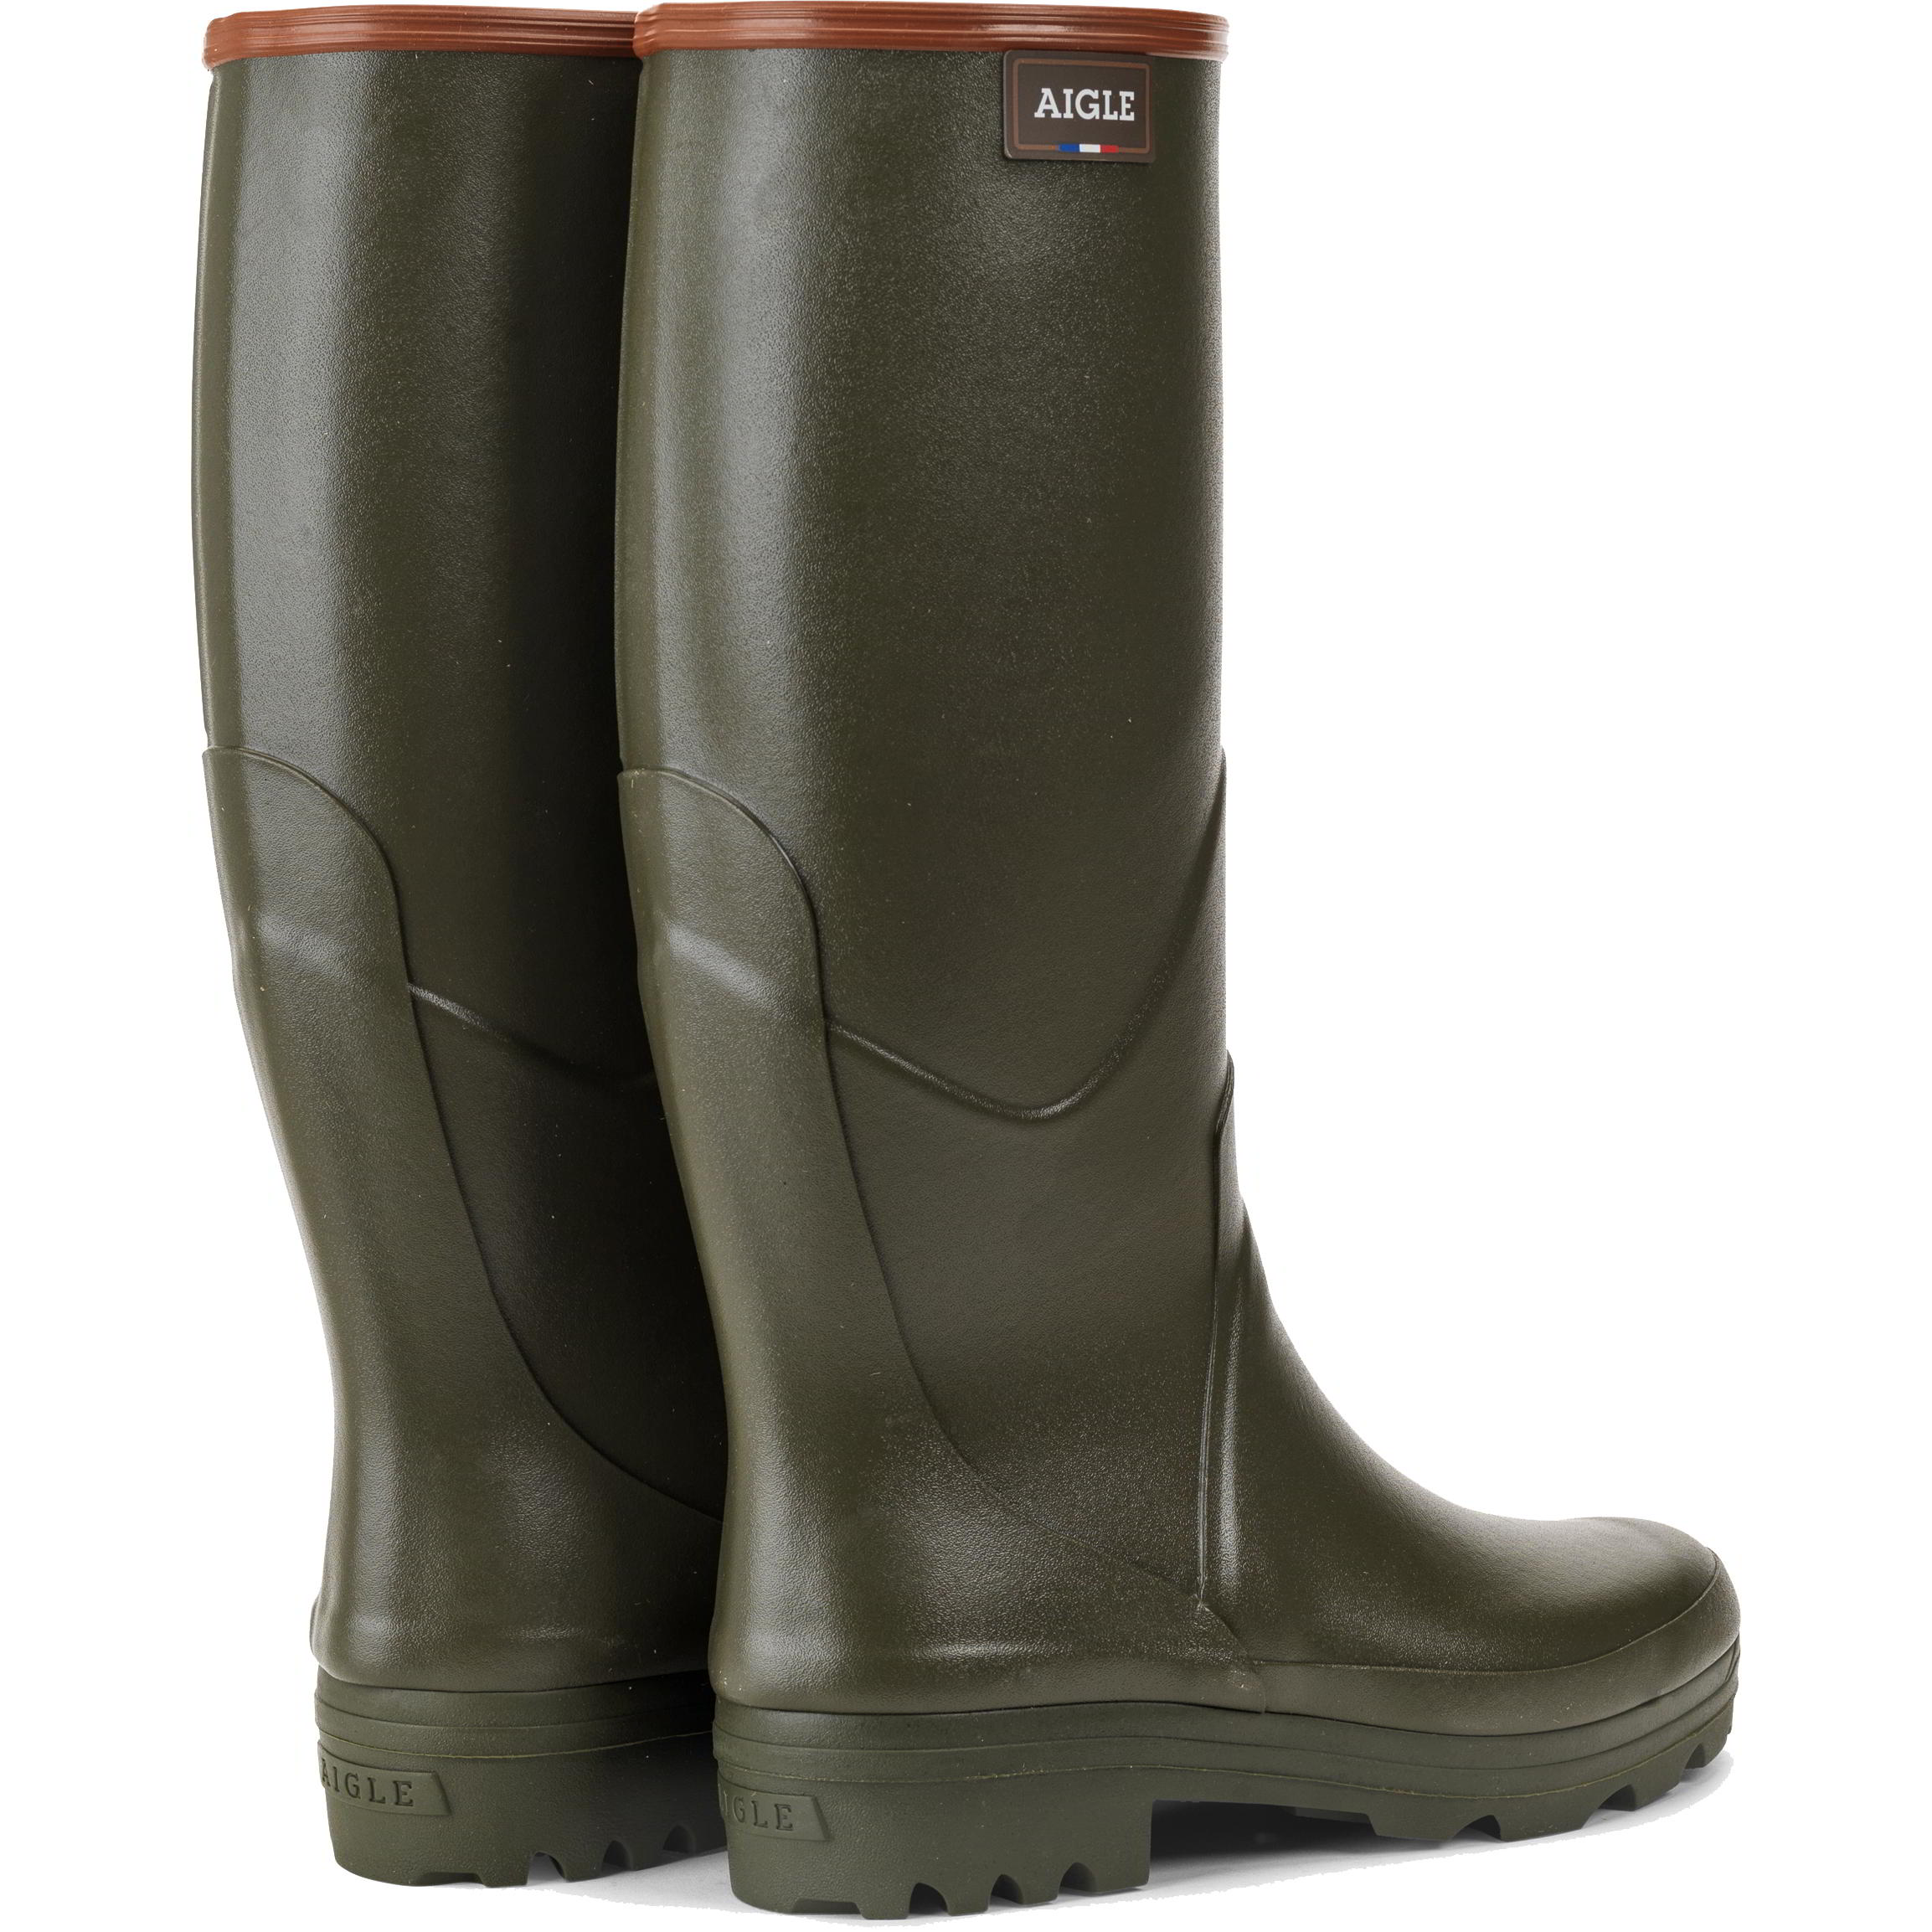 Aigle Mens Chambord Pro 2 Wellies Rain Boots - UK 7.5 Green 2951